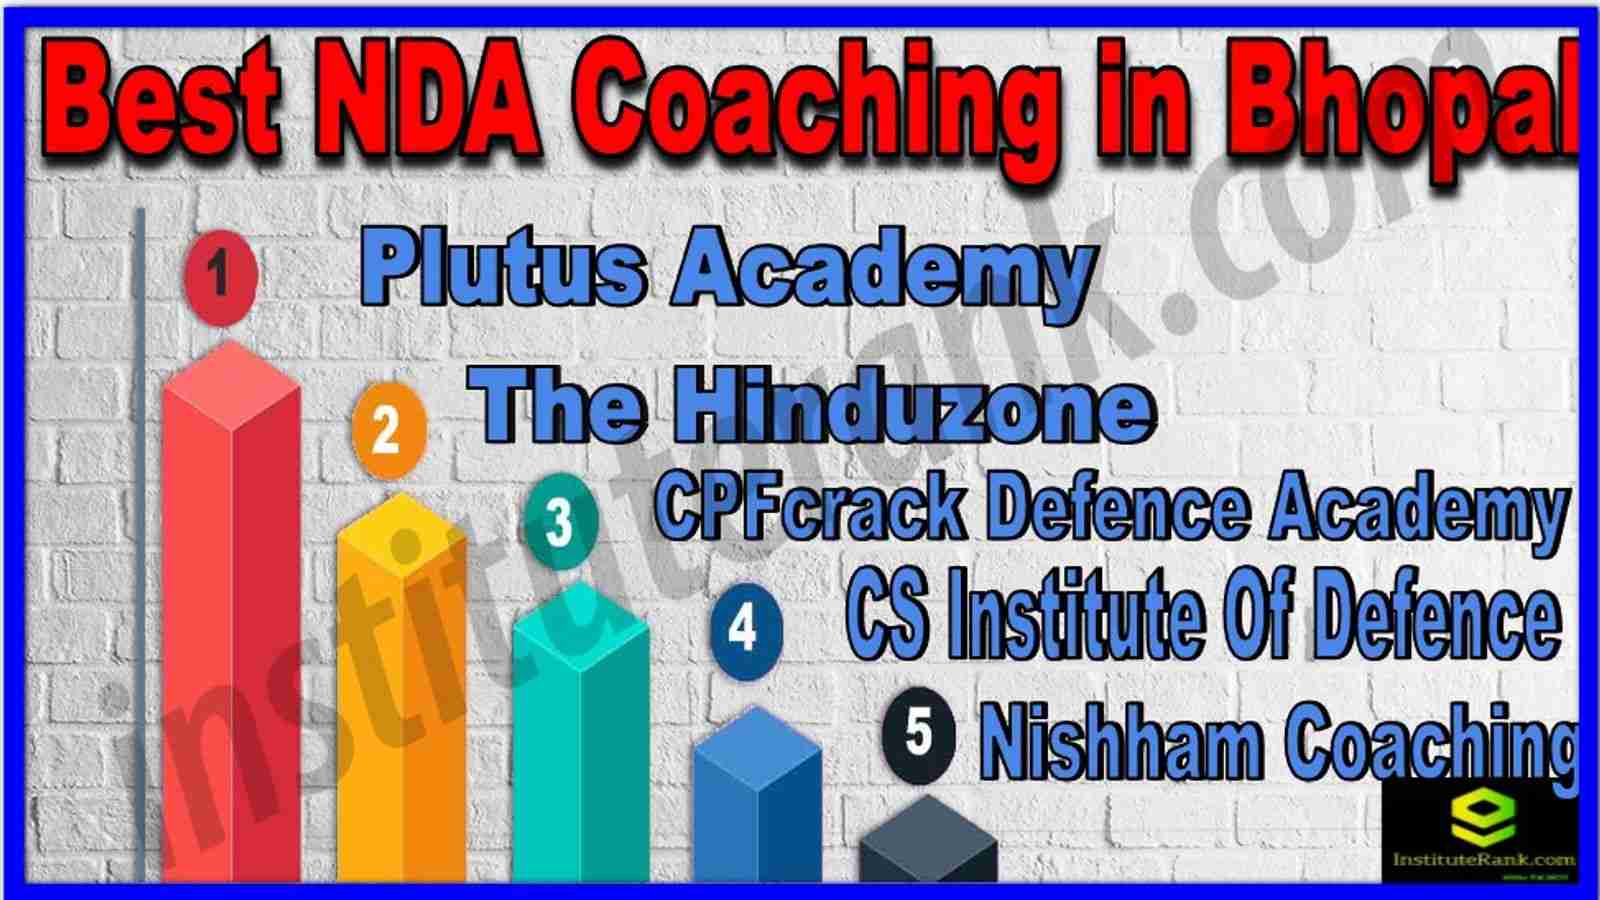 Best NDA Coaching in Bhopal